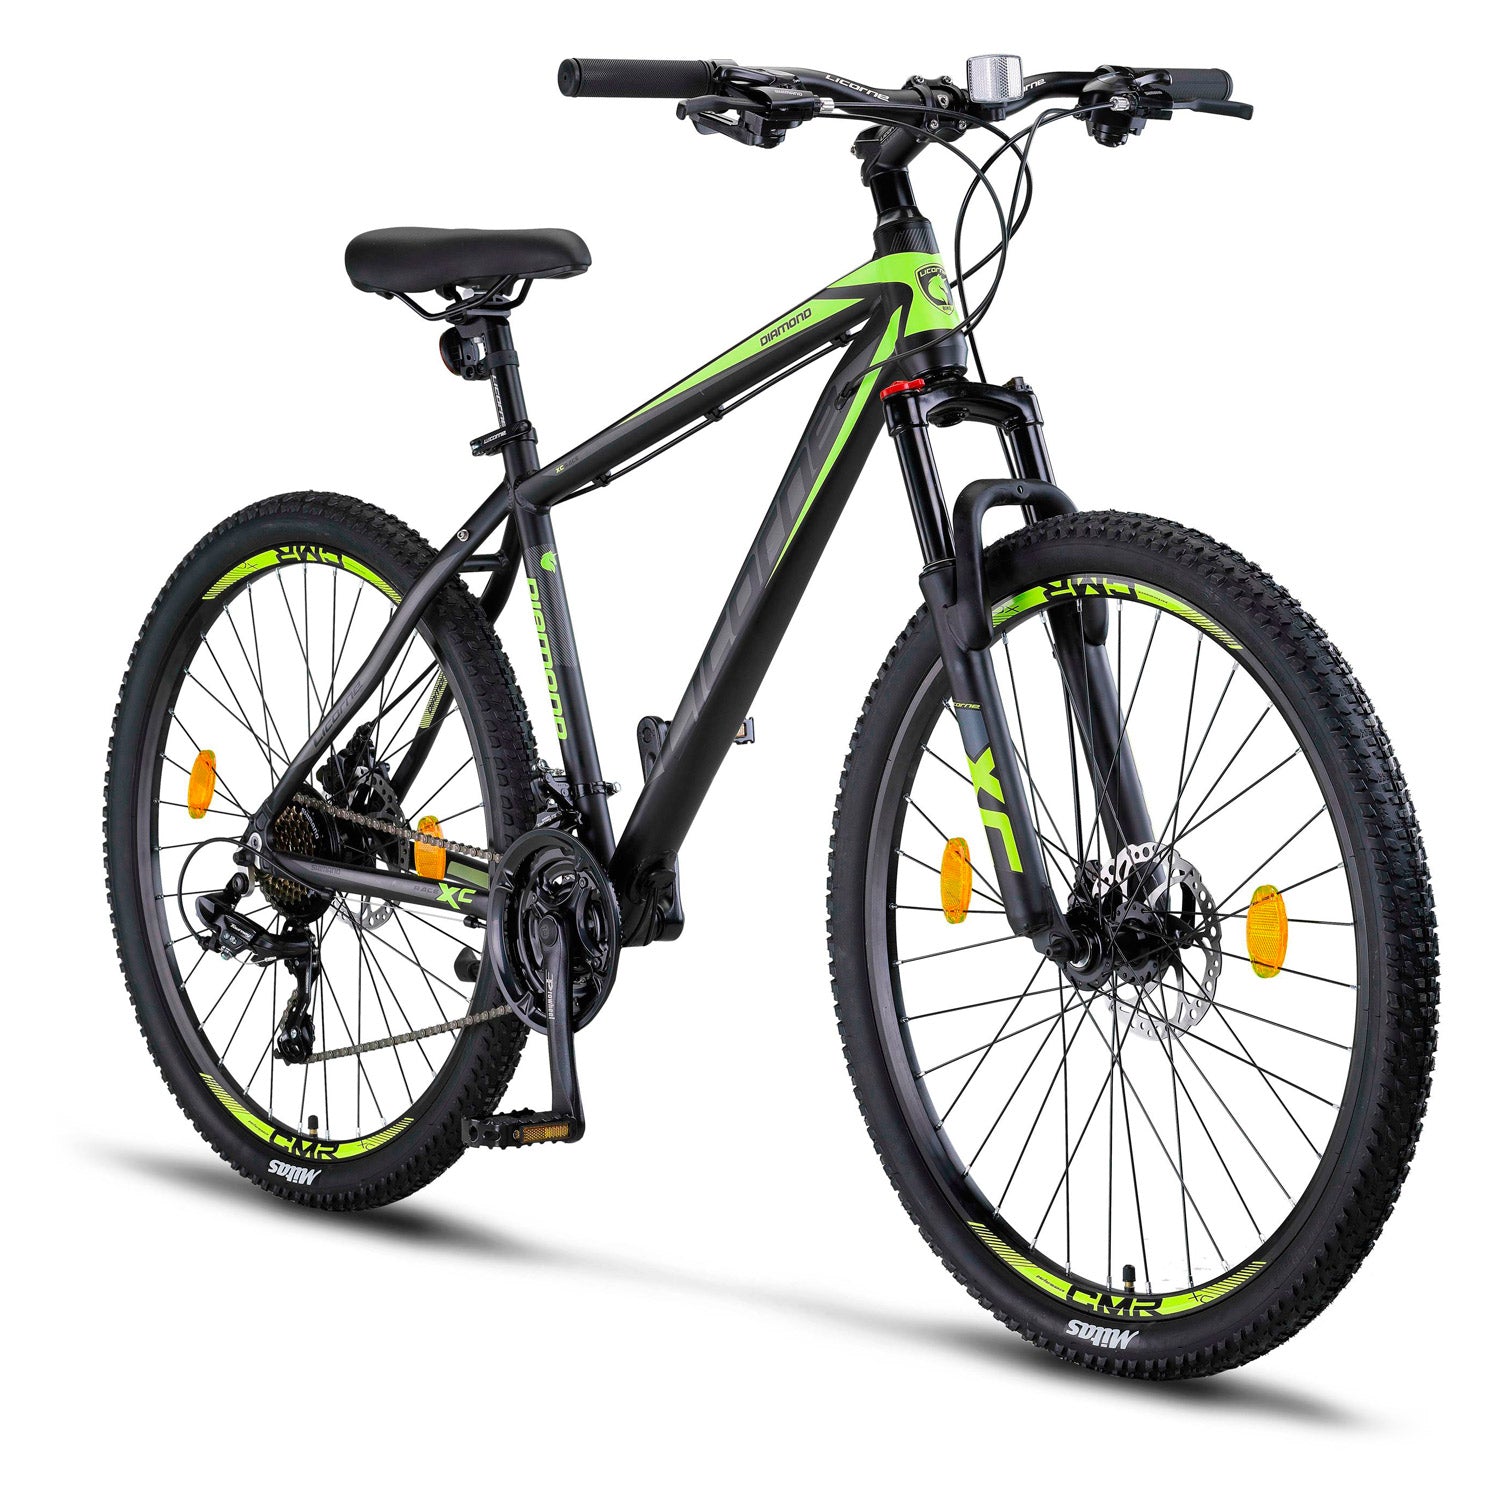 Licorne Bike Diamond premium mountain bike aluminum, bike for boys, girls, men and women - 21 speed gears - disc brake men's bike, adjustable front fork 26, 27.5 and 29 inch